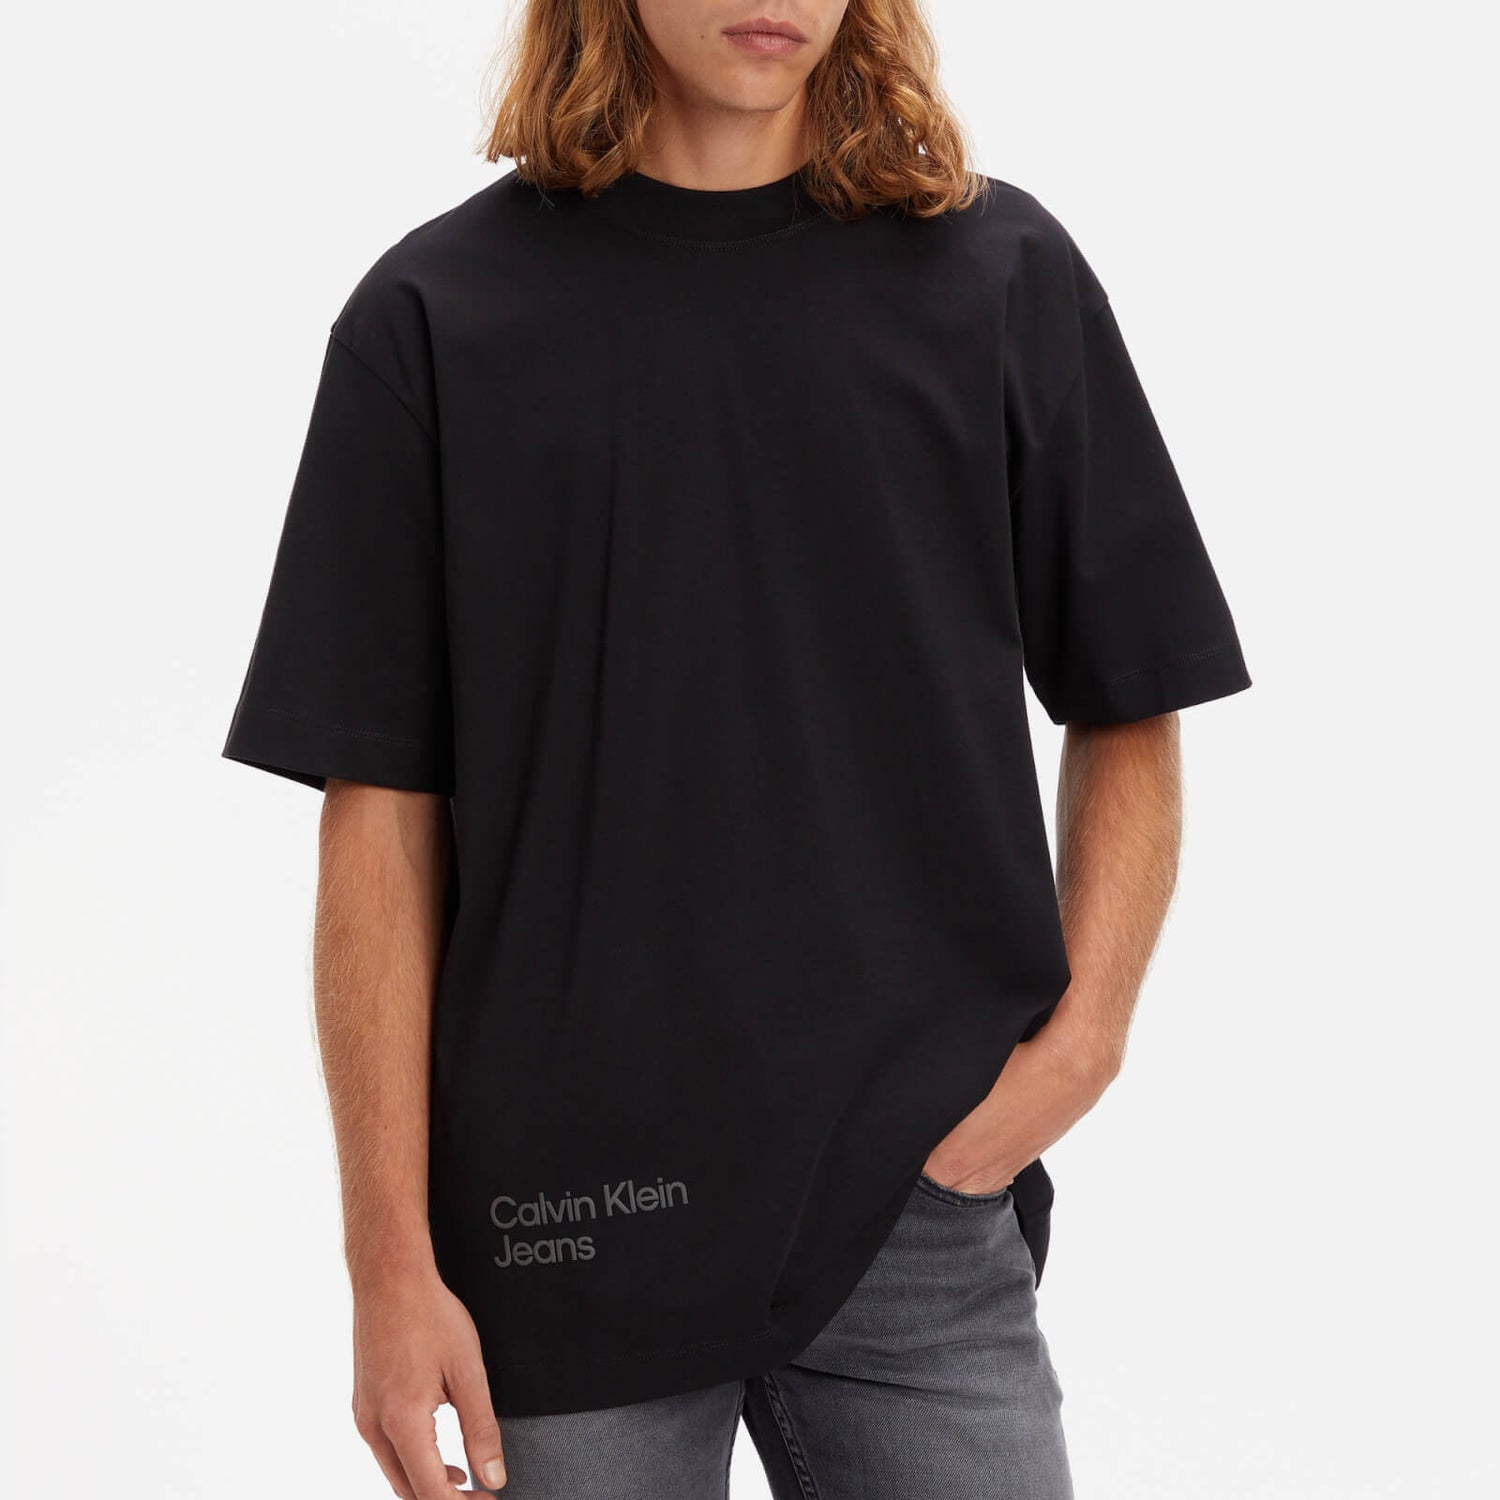 Calvin Klein Jeans Blurred Coloured Address Cotton T-Shirt - S